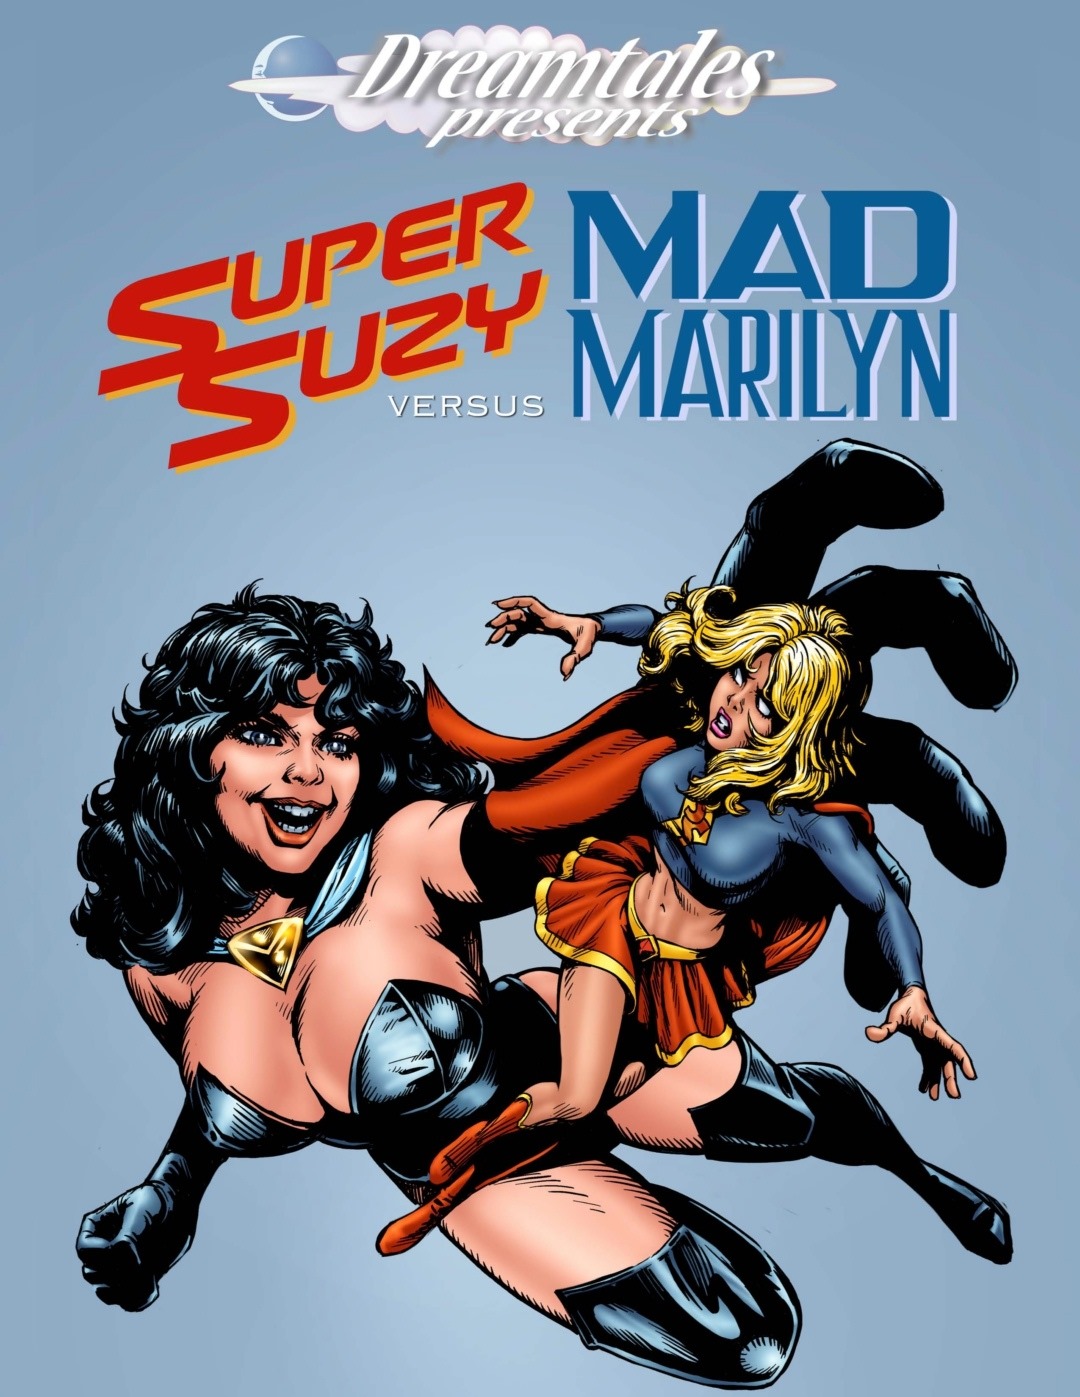 Super Suzy Vs Mad Marilyn image 01